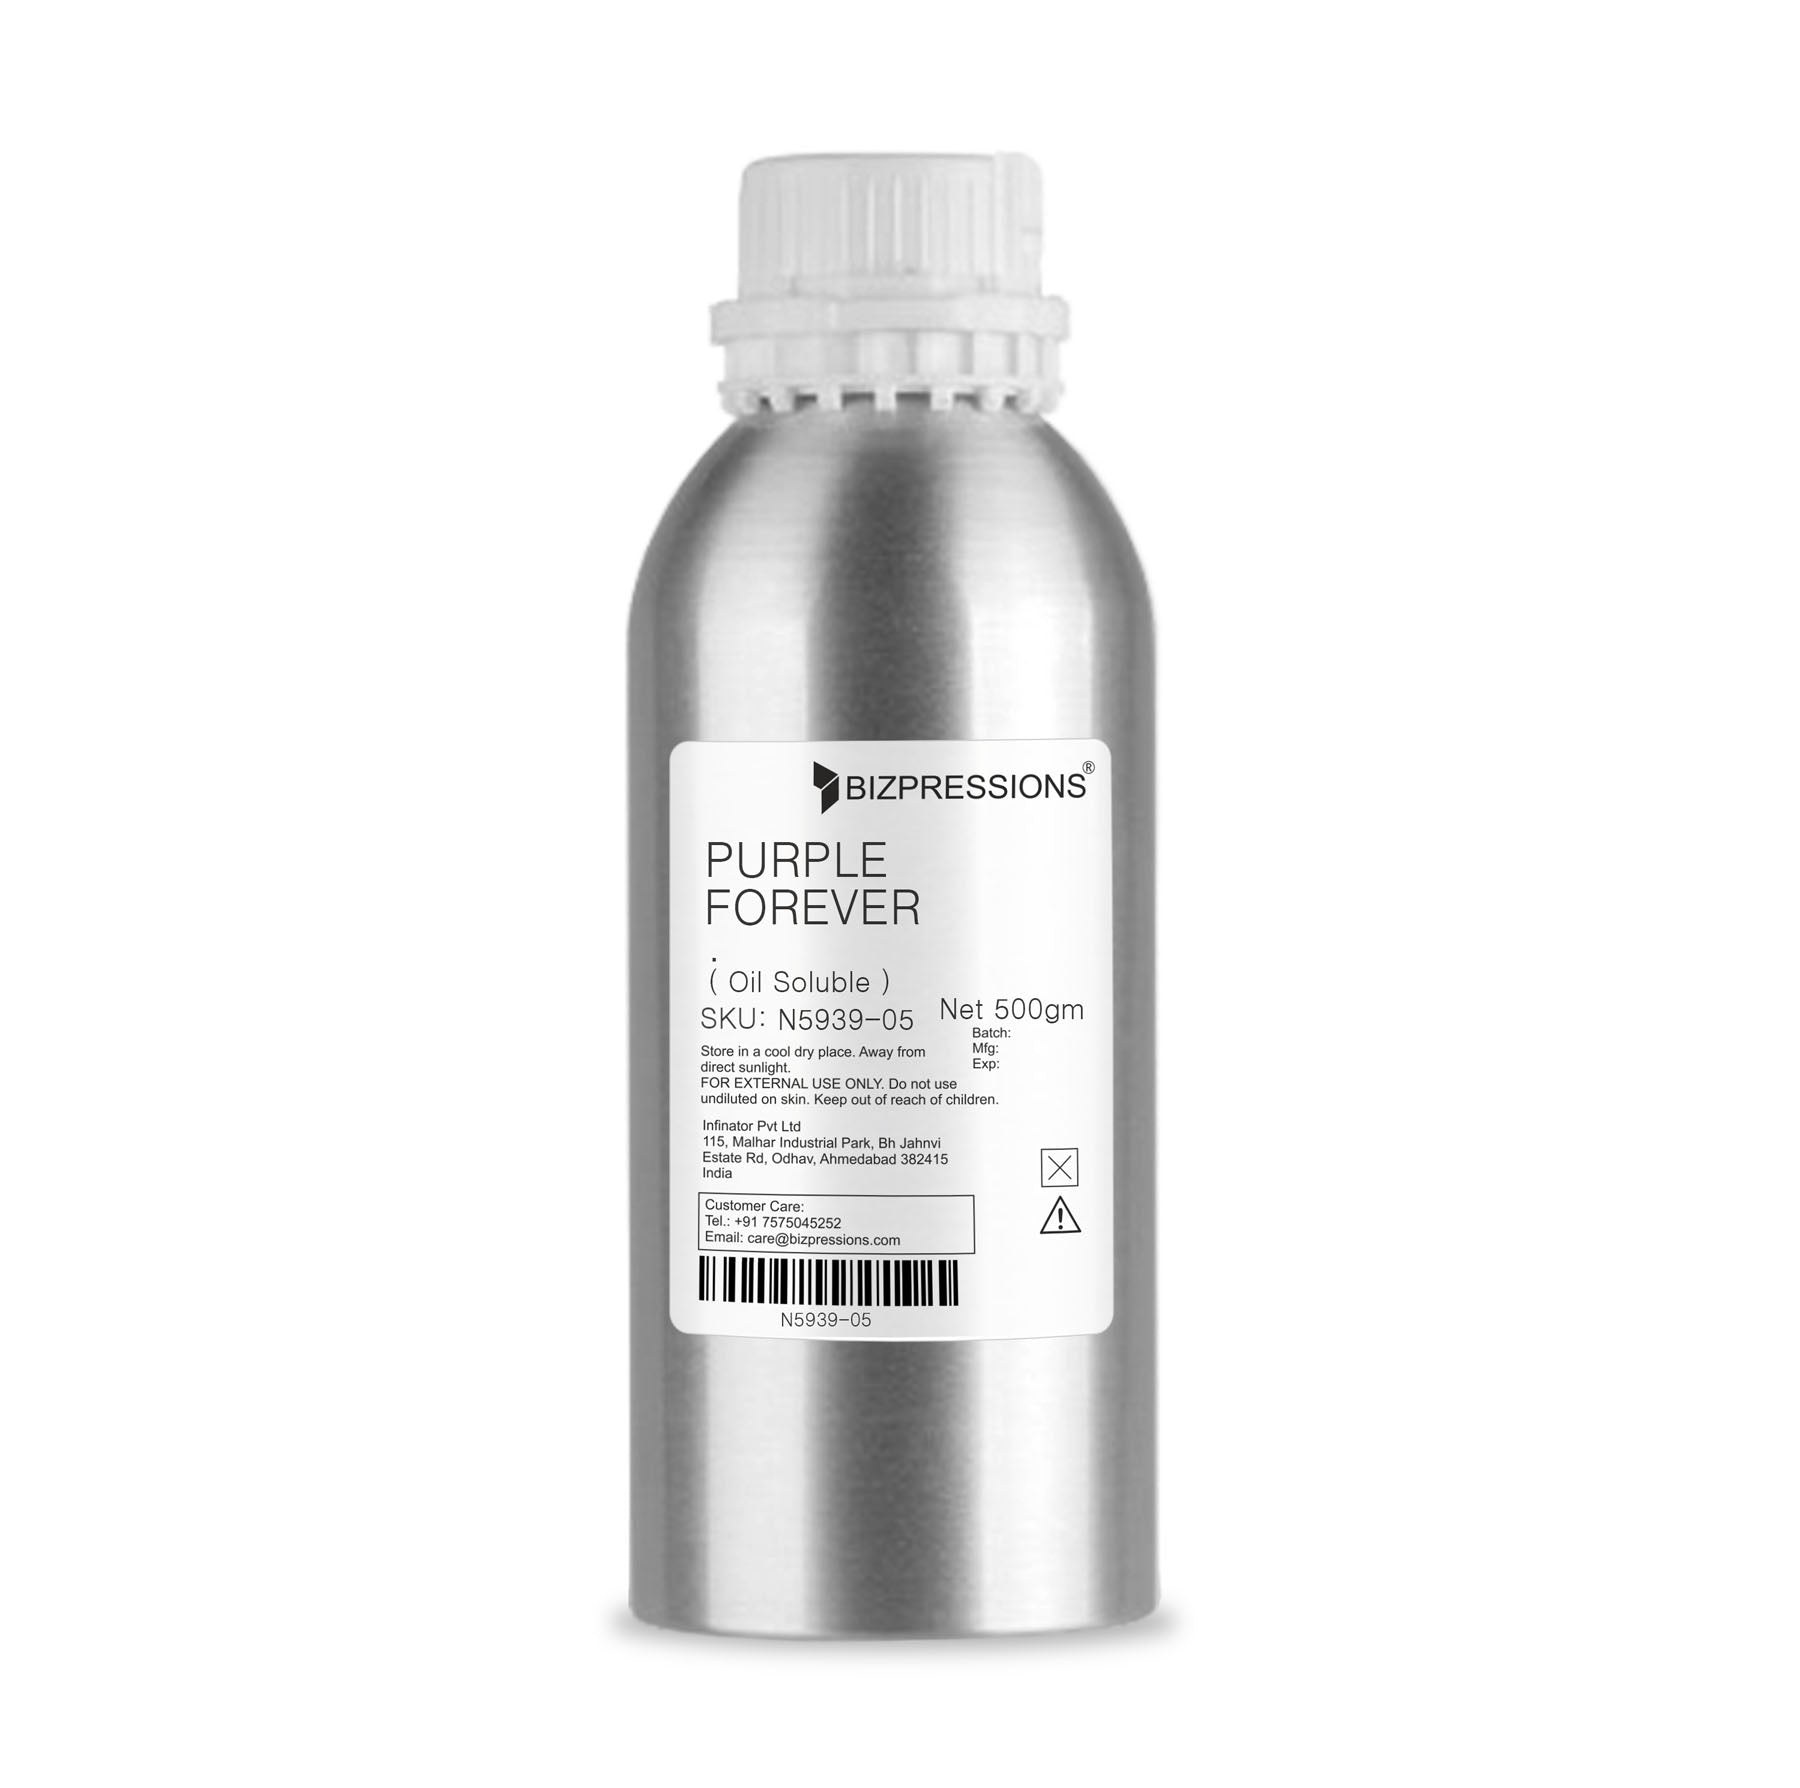 PURPLE FOREVER - Fragrance ( Oil Soluble ) - 500 gm